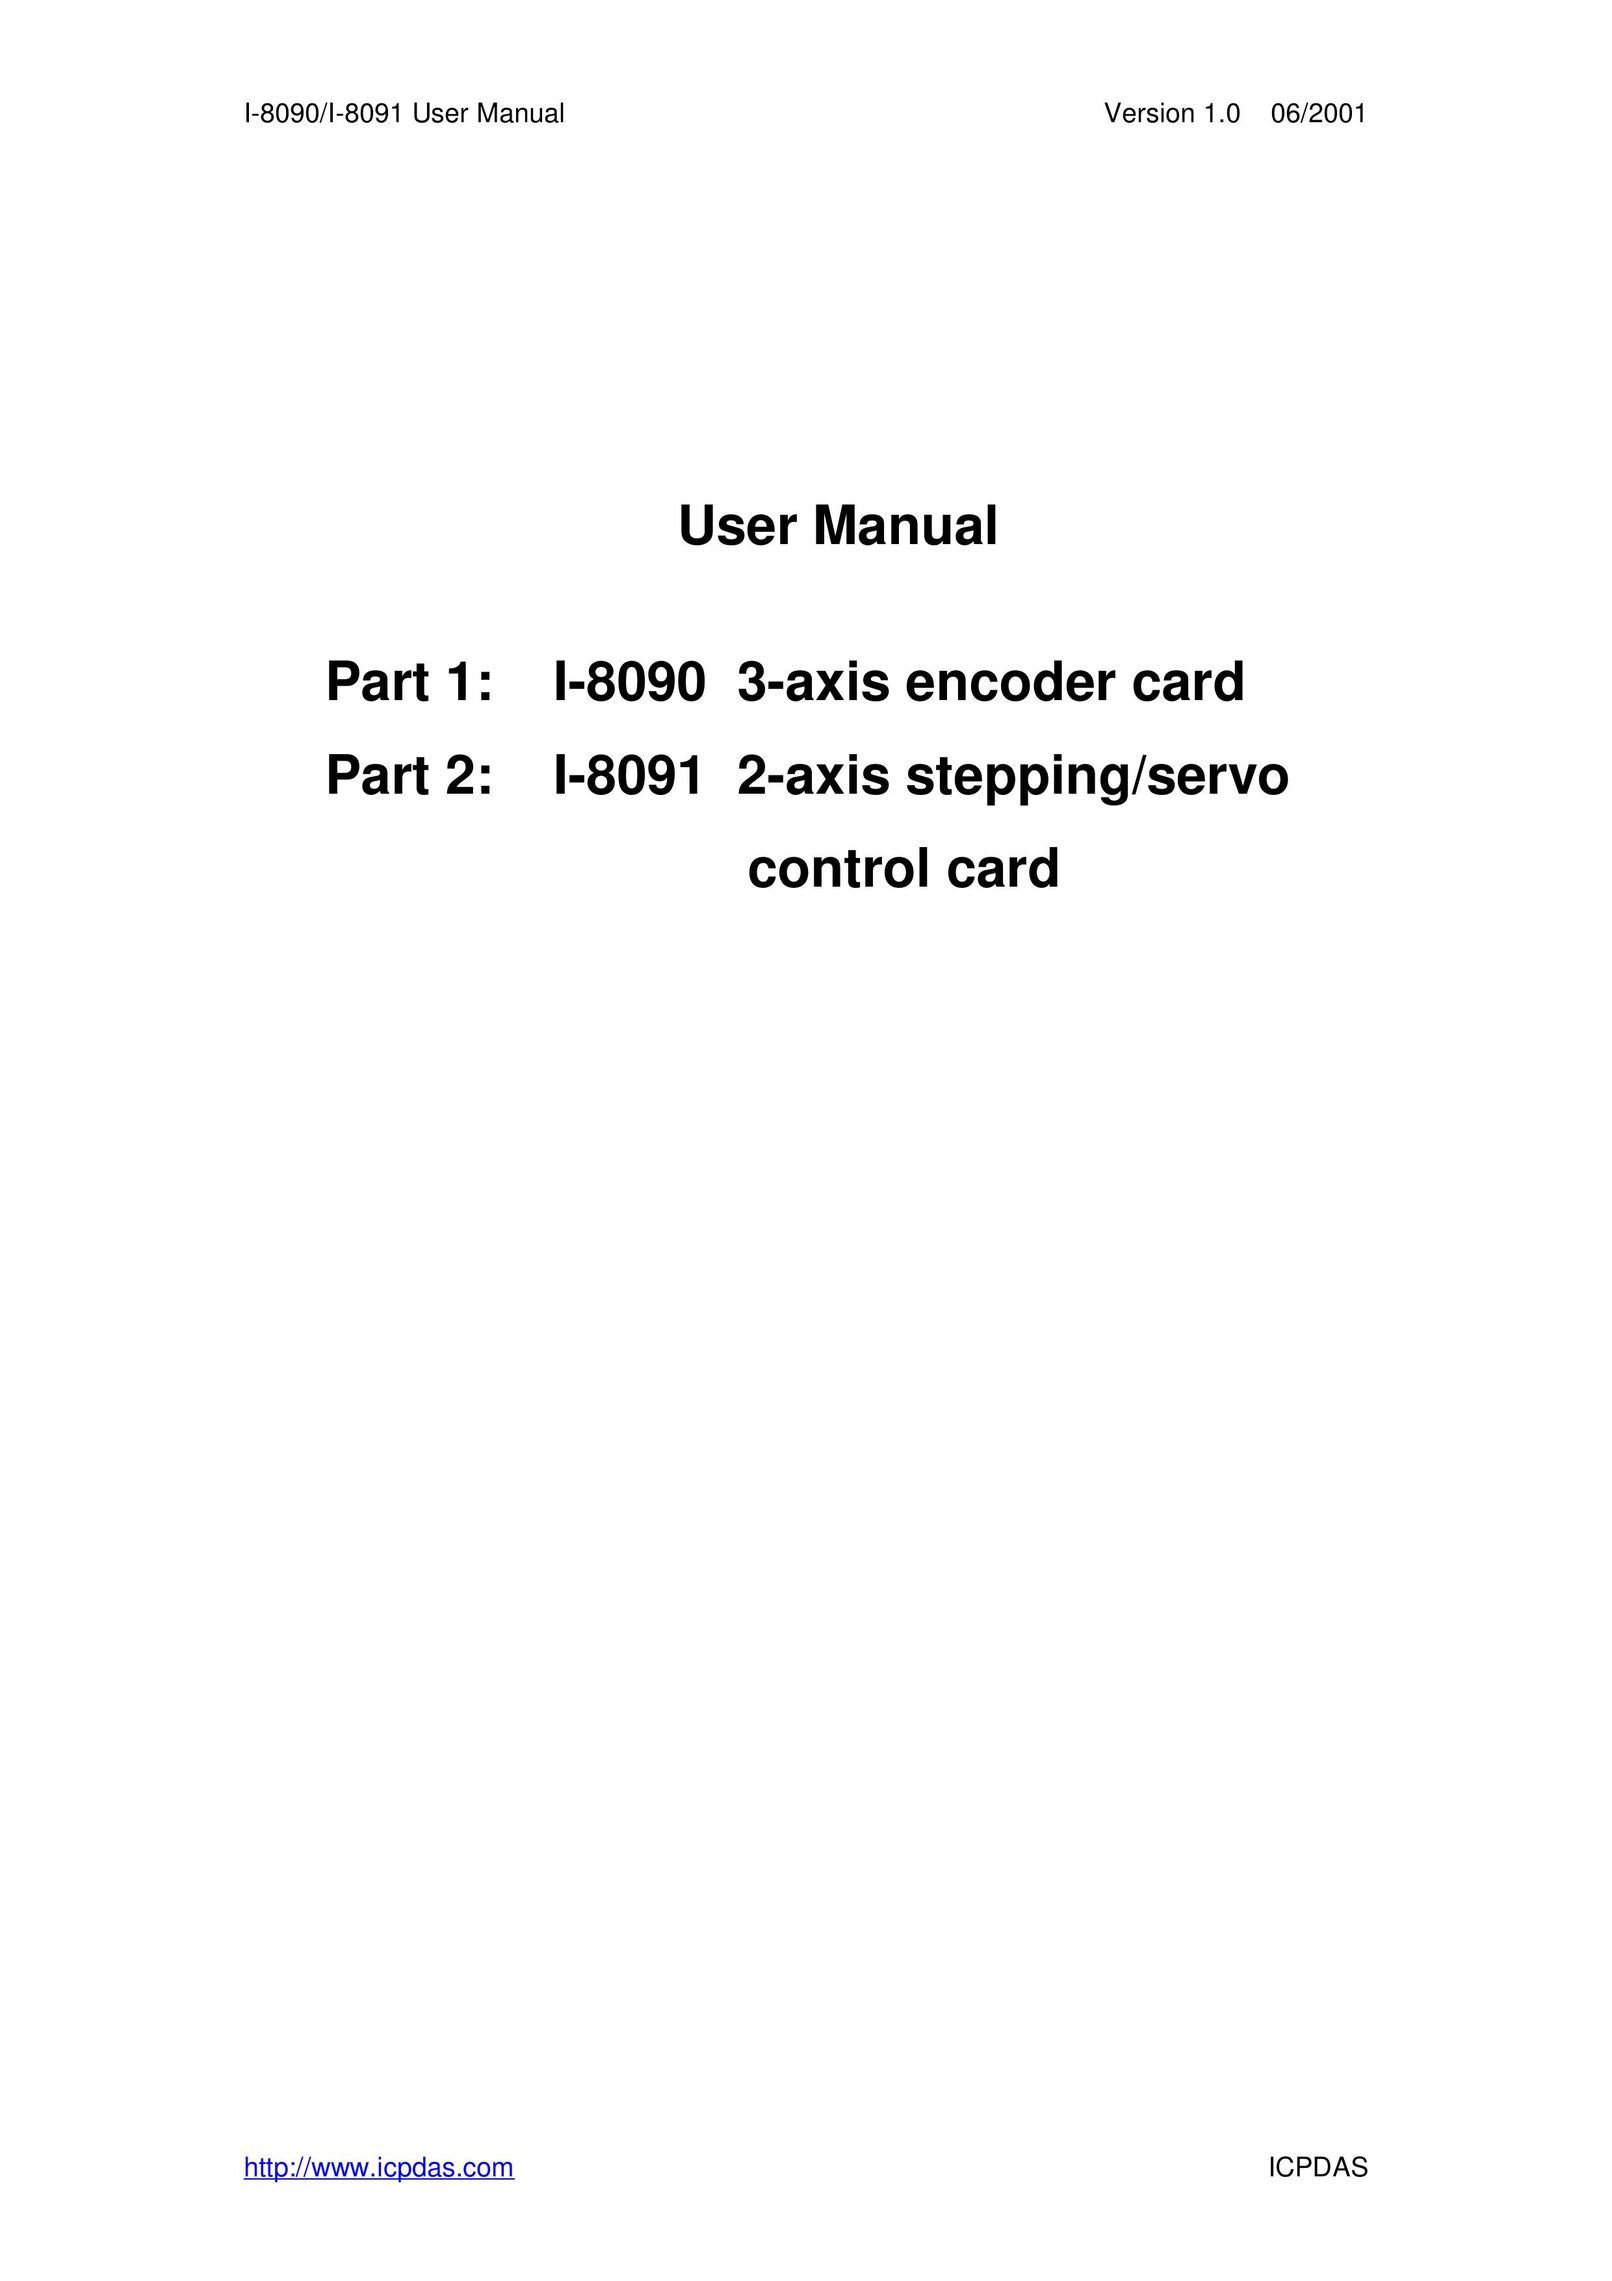 ICP DAS USA 3-axis encoder card, 2-axis stepping/servo Computer Hardware User Manual